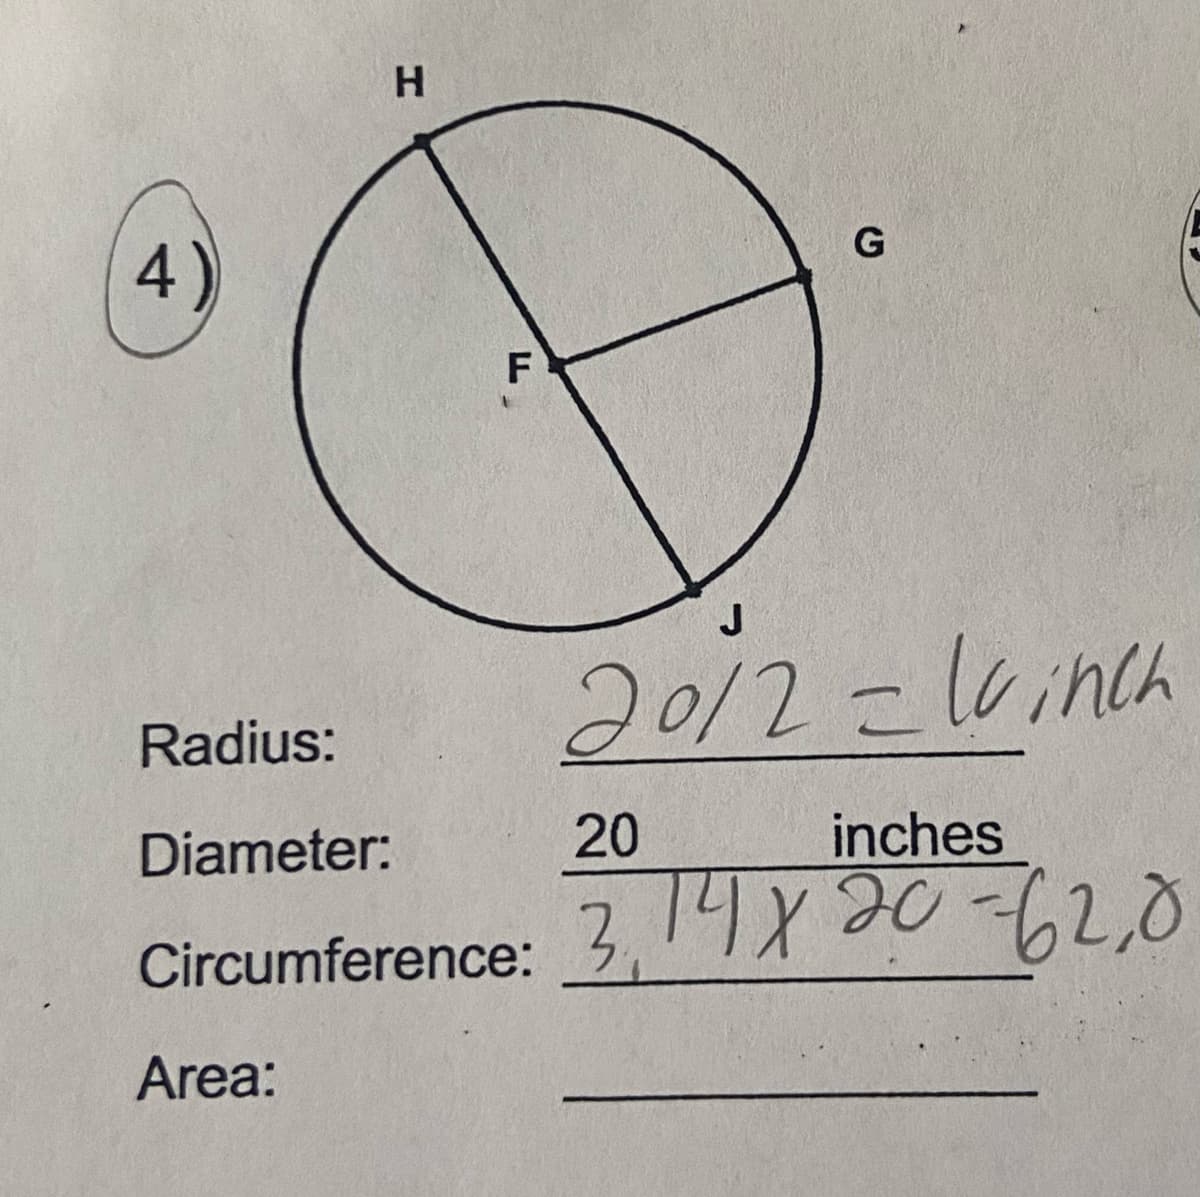 G
4)
2012=16inch
Radius:
Diameter:
20
inches
Circumference: 3, 19x20-62.ð
Area:
